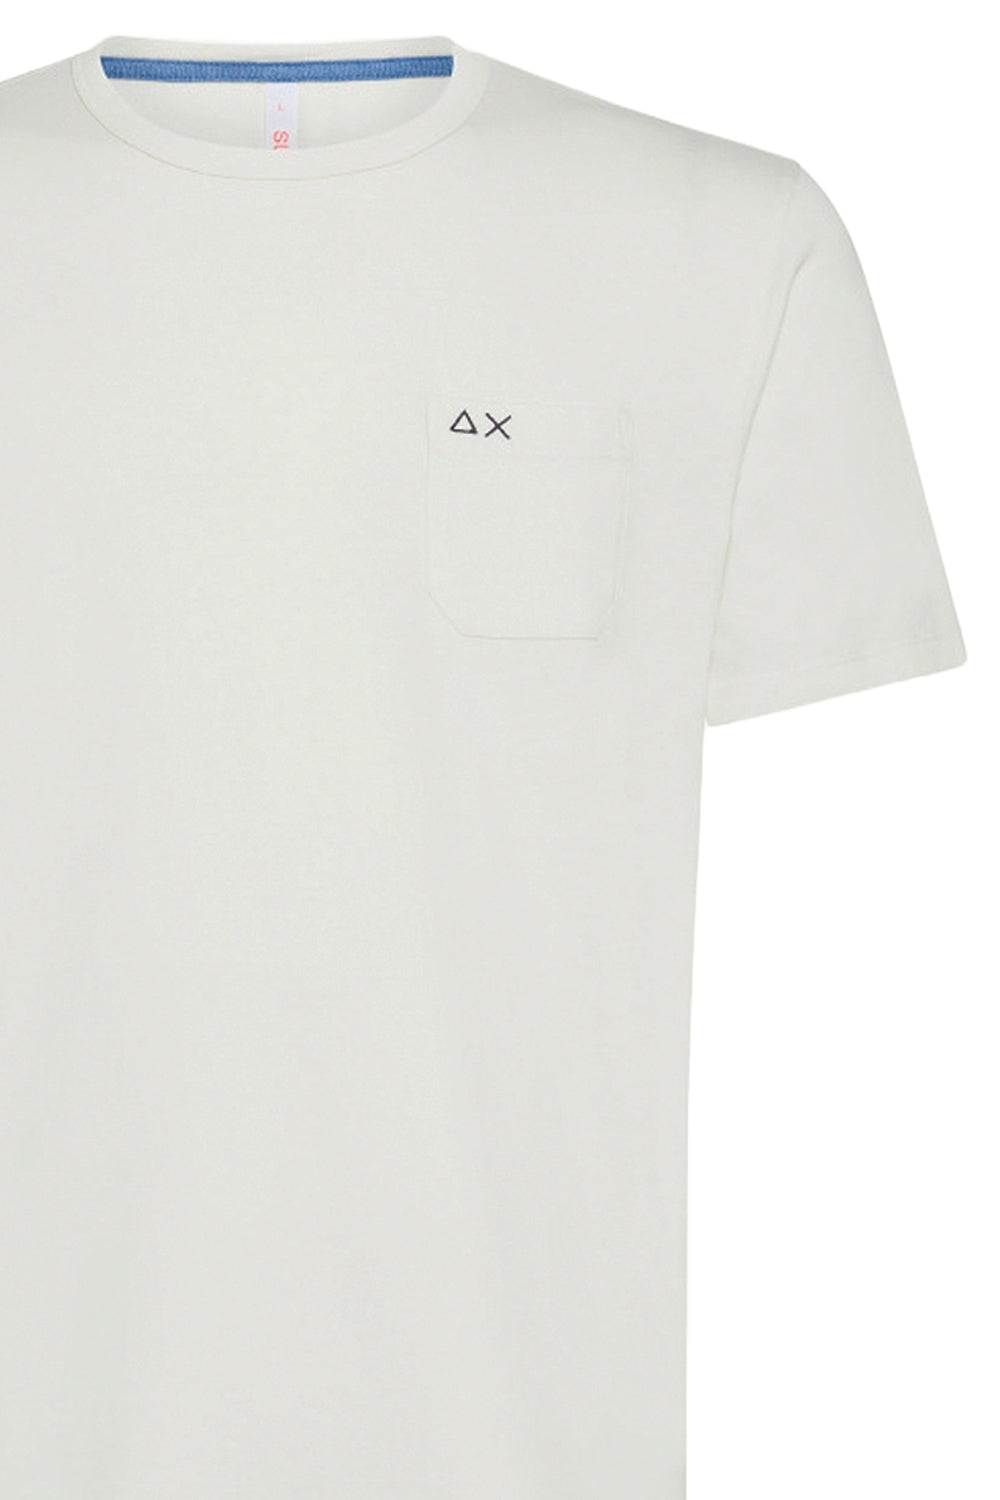 SUN 68 T-shirt girocollo con taschino